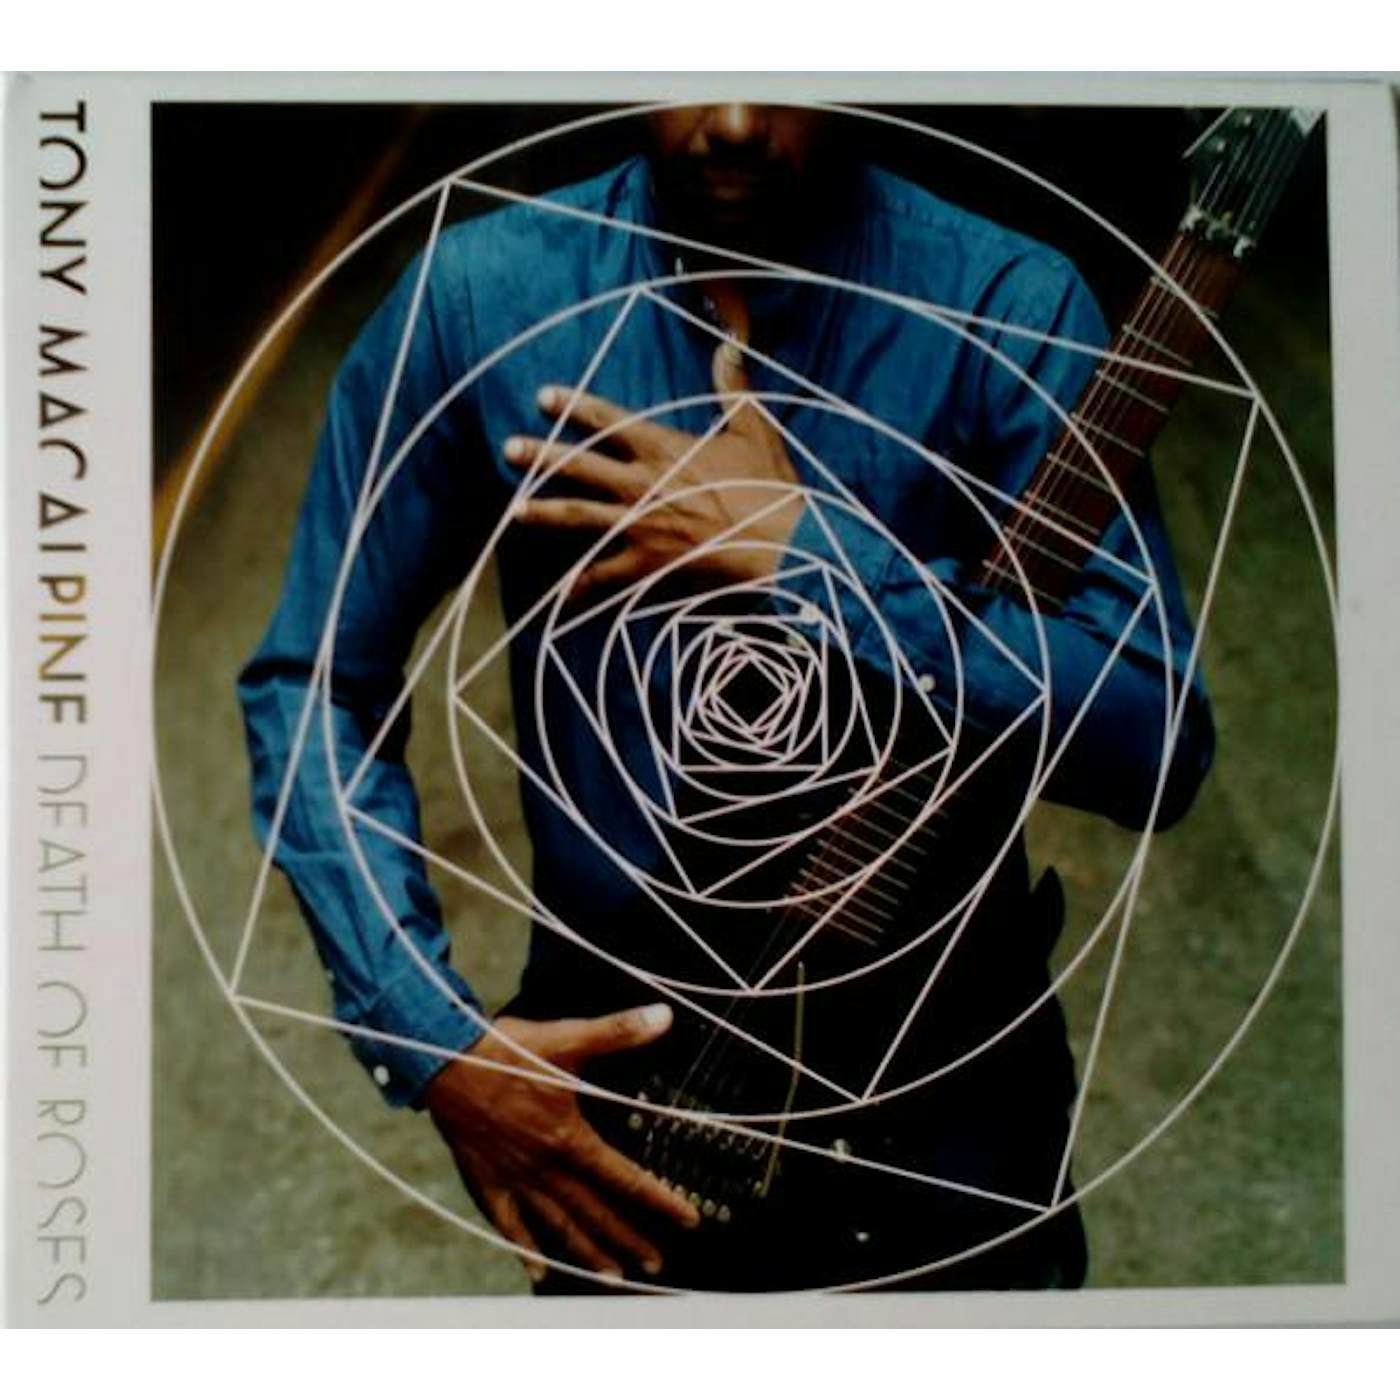 Tony MacAlpine DEATH OF ROSES CD